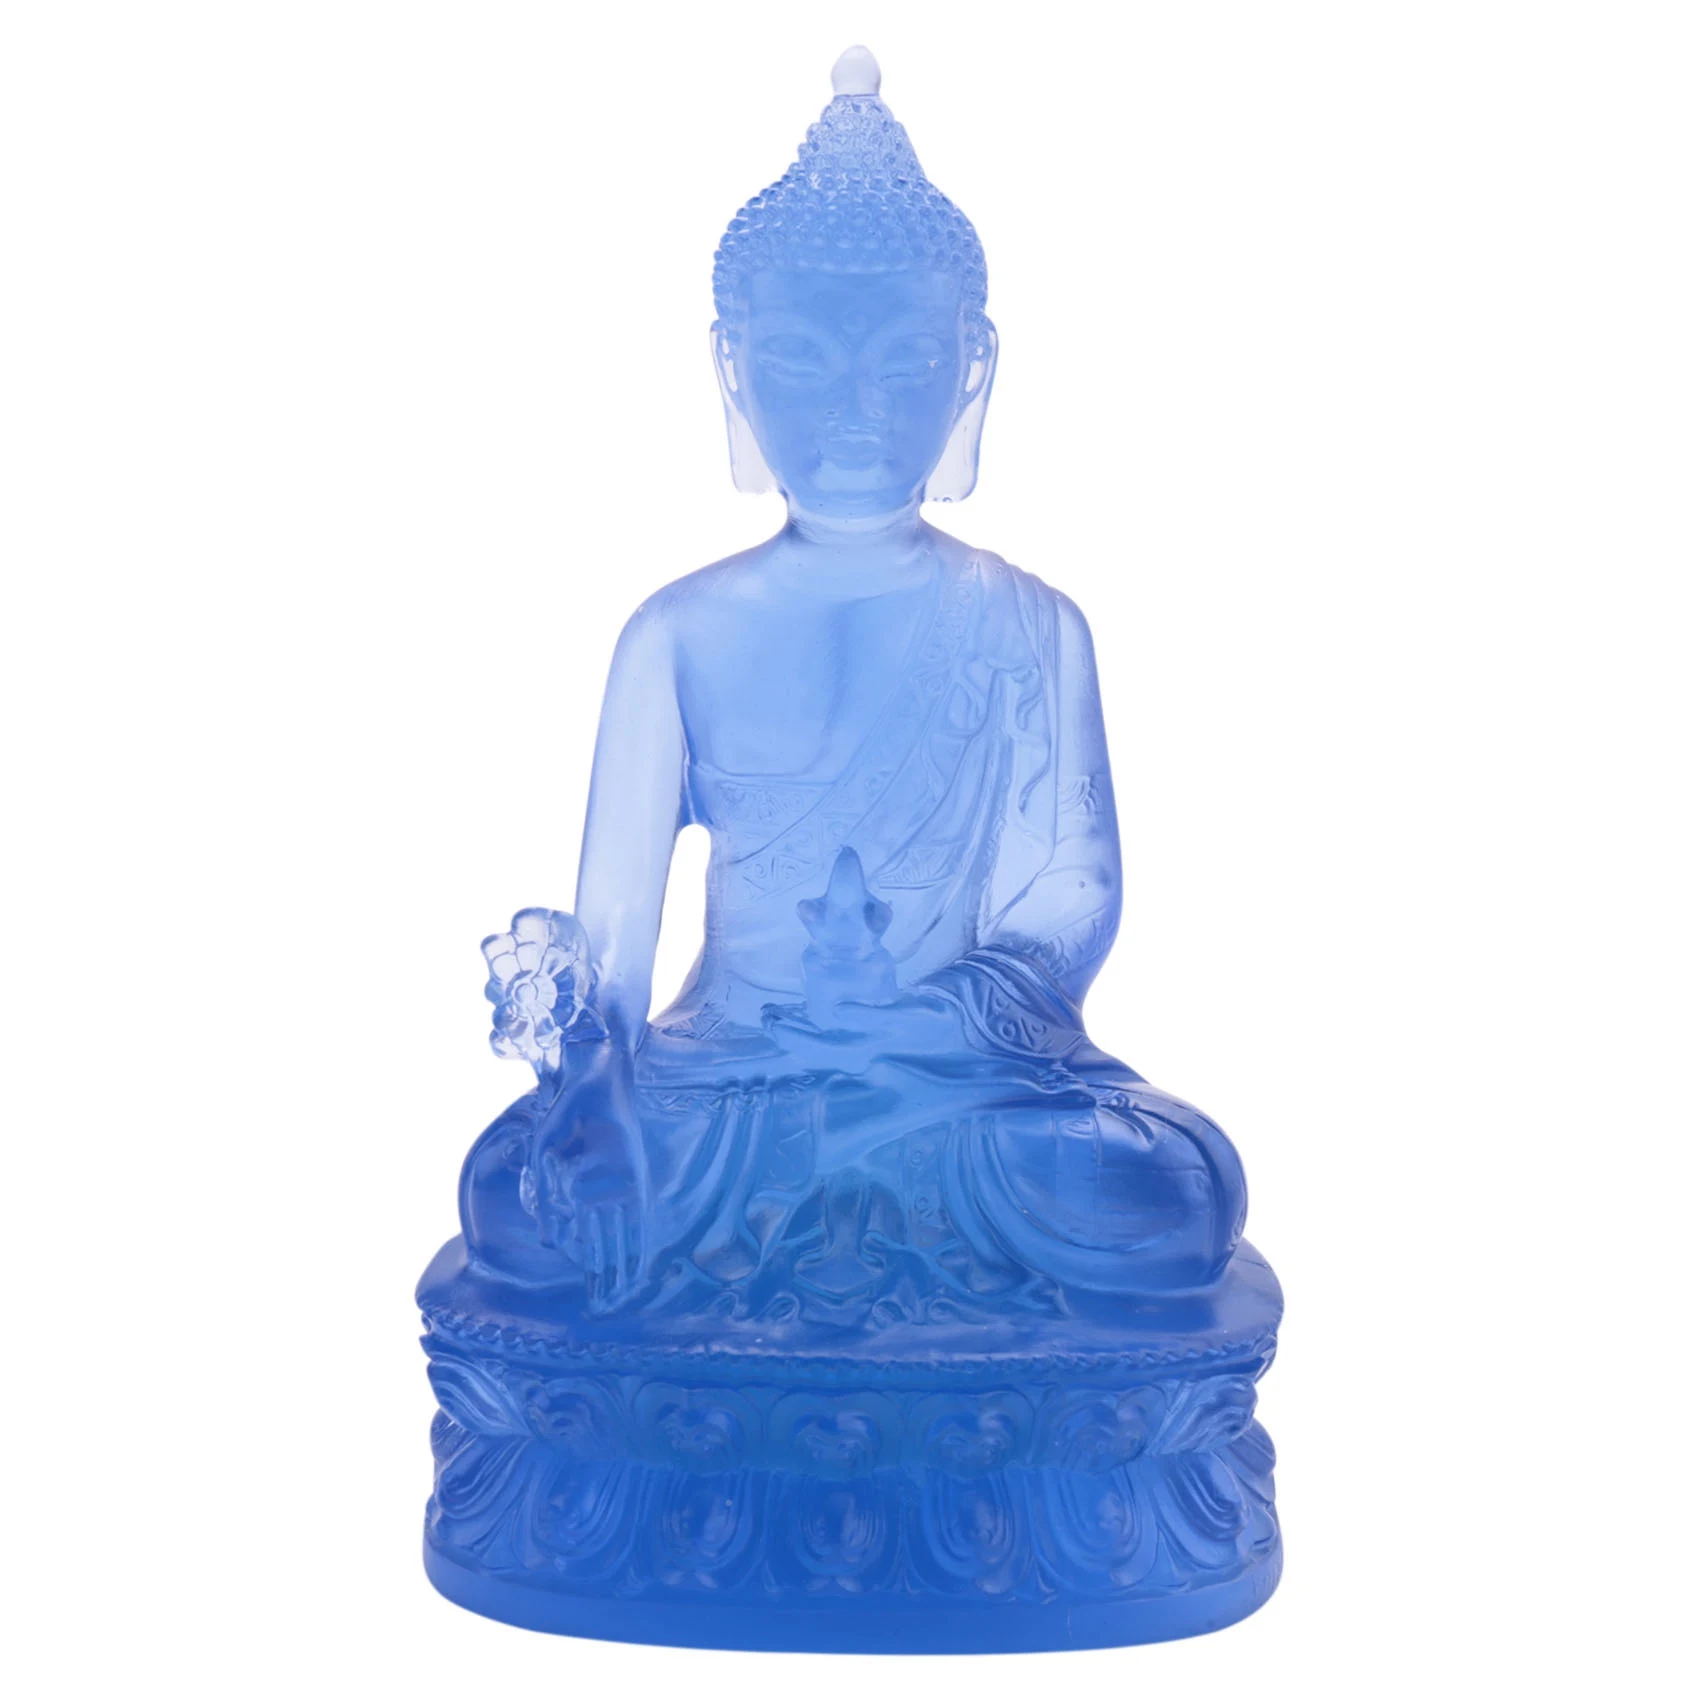 

Tibetan Medicine Buddha Statue,Translucent Resin Buddha Sculpture Meditation Decor Spiritual Decor Collectible -Blue